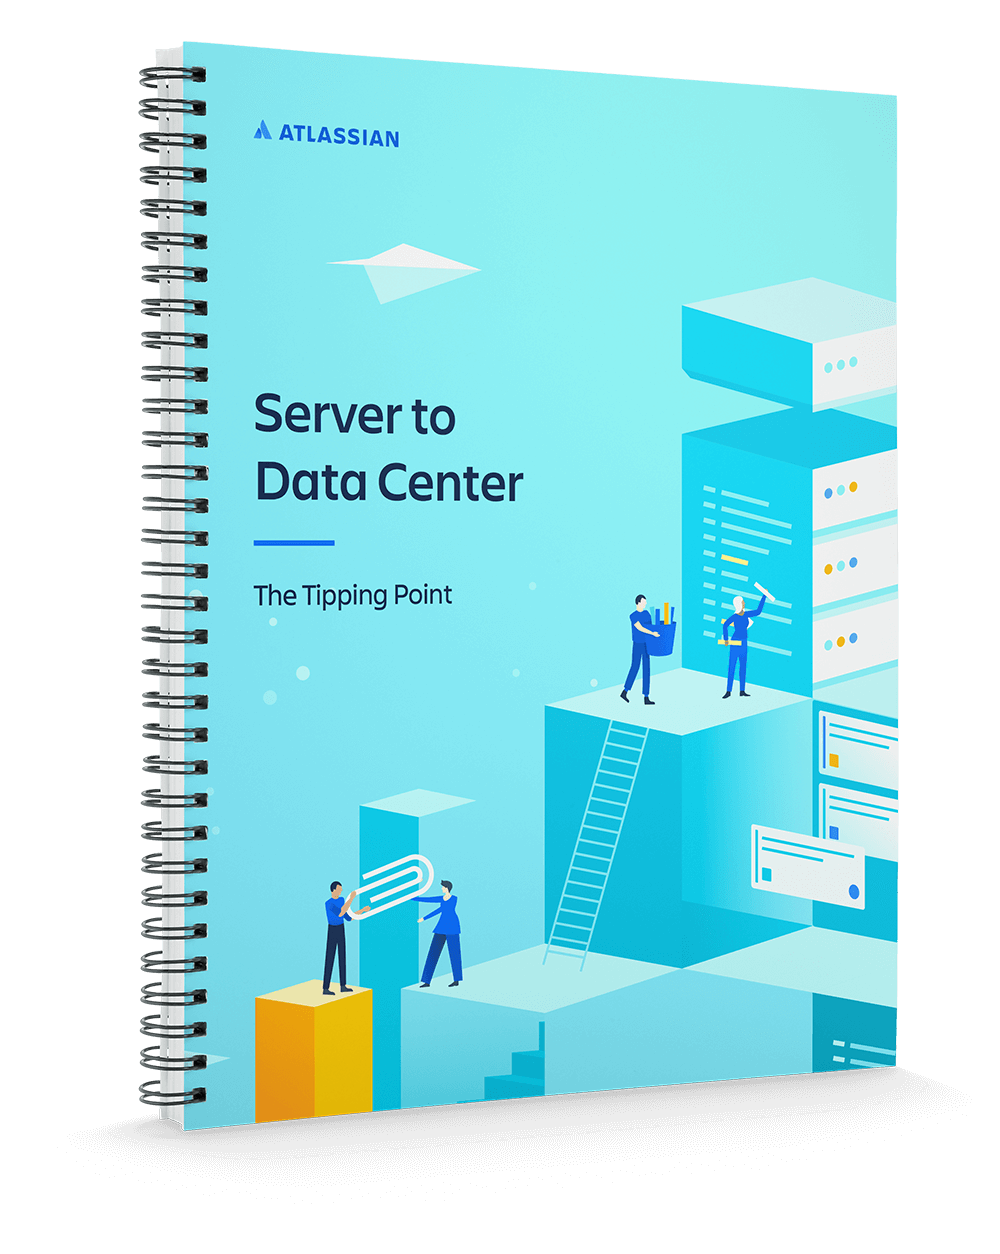 Portada del pdf "De Server a Data Center"